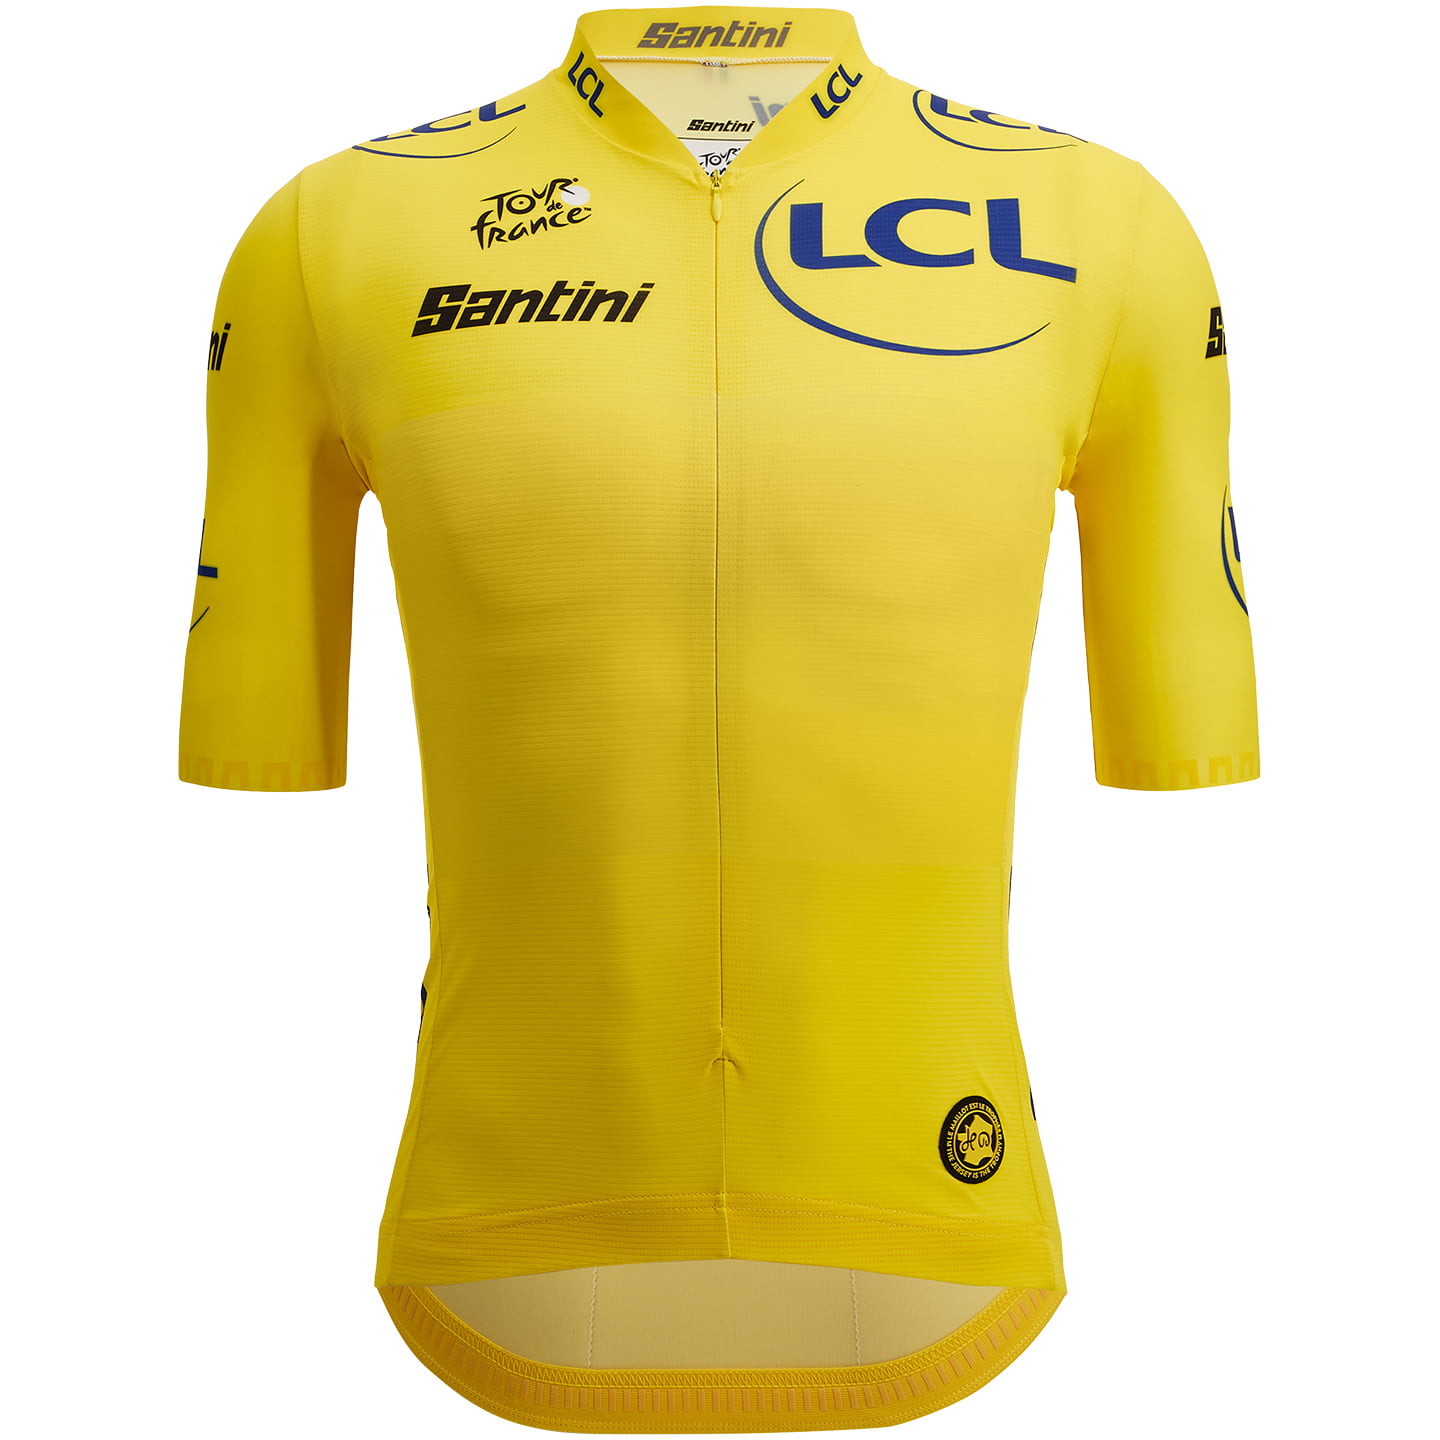 TOUR DE FRANCE Race Yellow Jersey 2022 Short Sleeve Jersey, for men, size 2XL, Cycle shirt, Bike gear